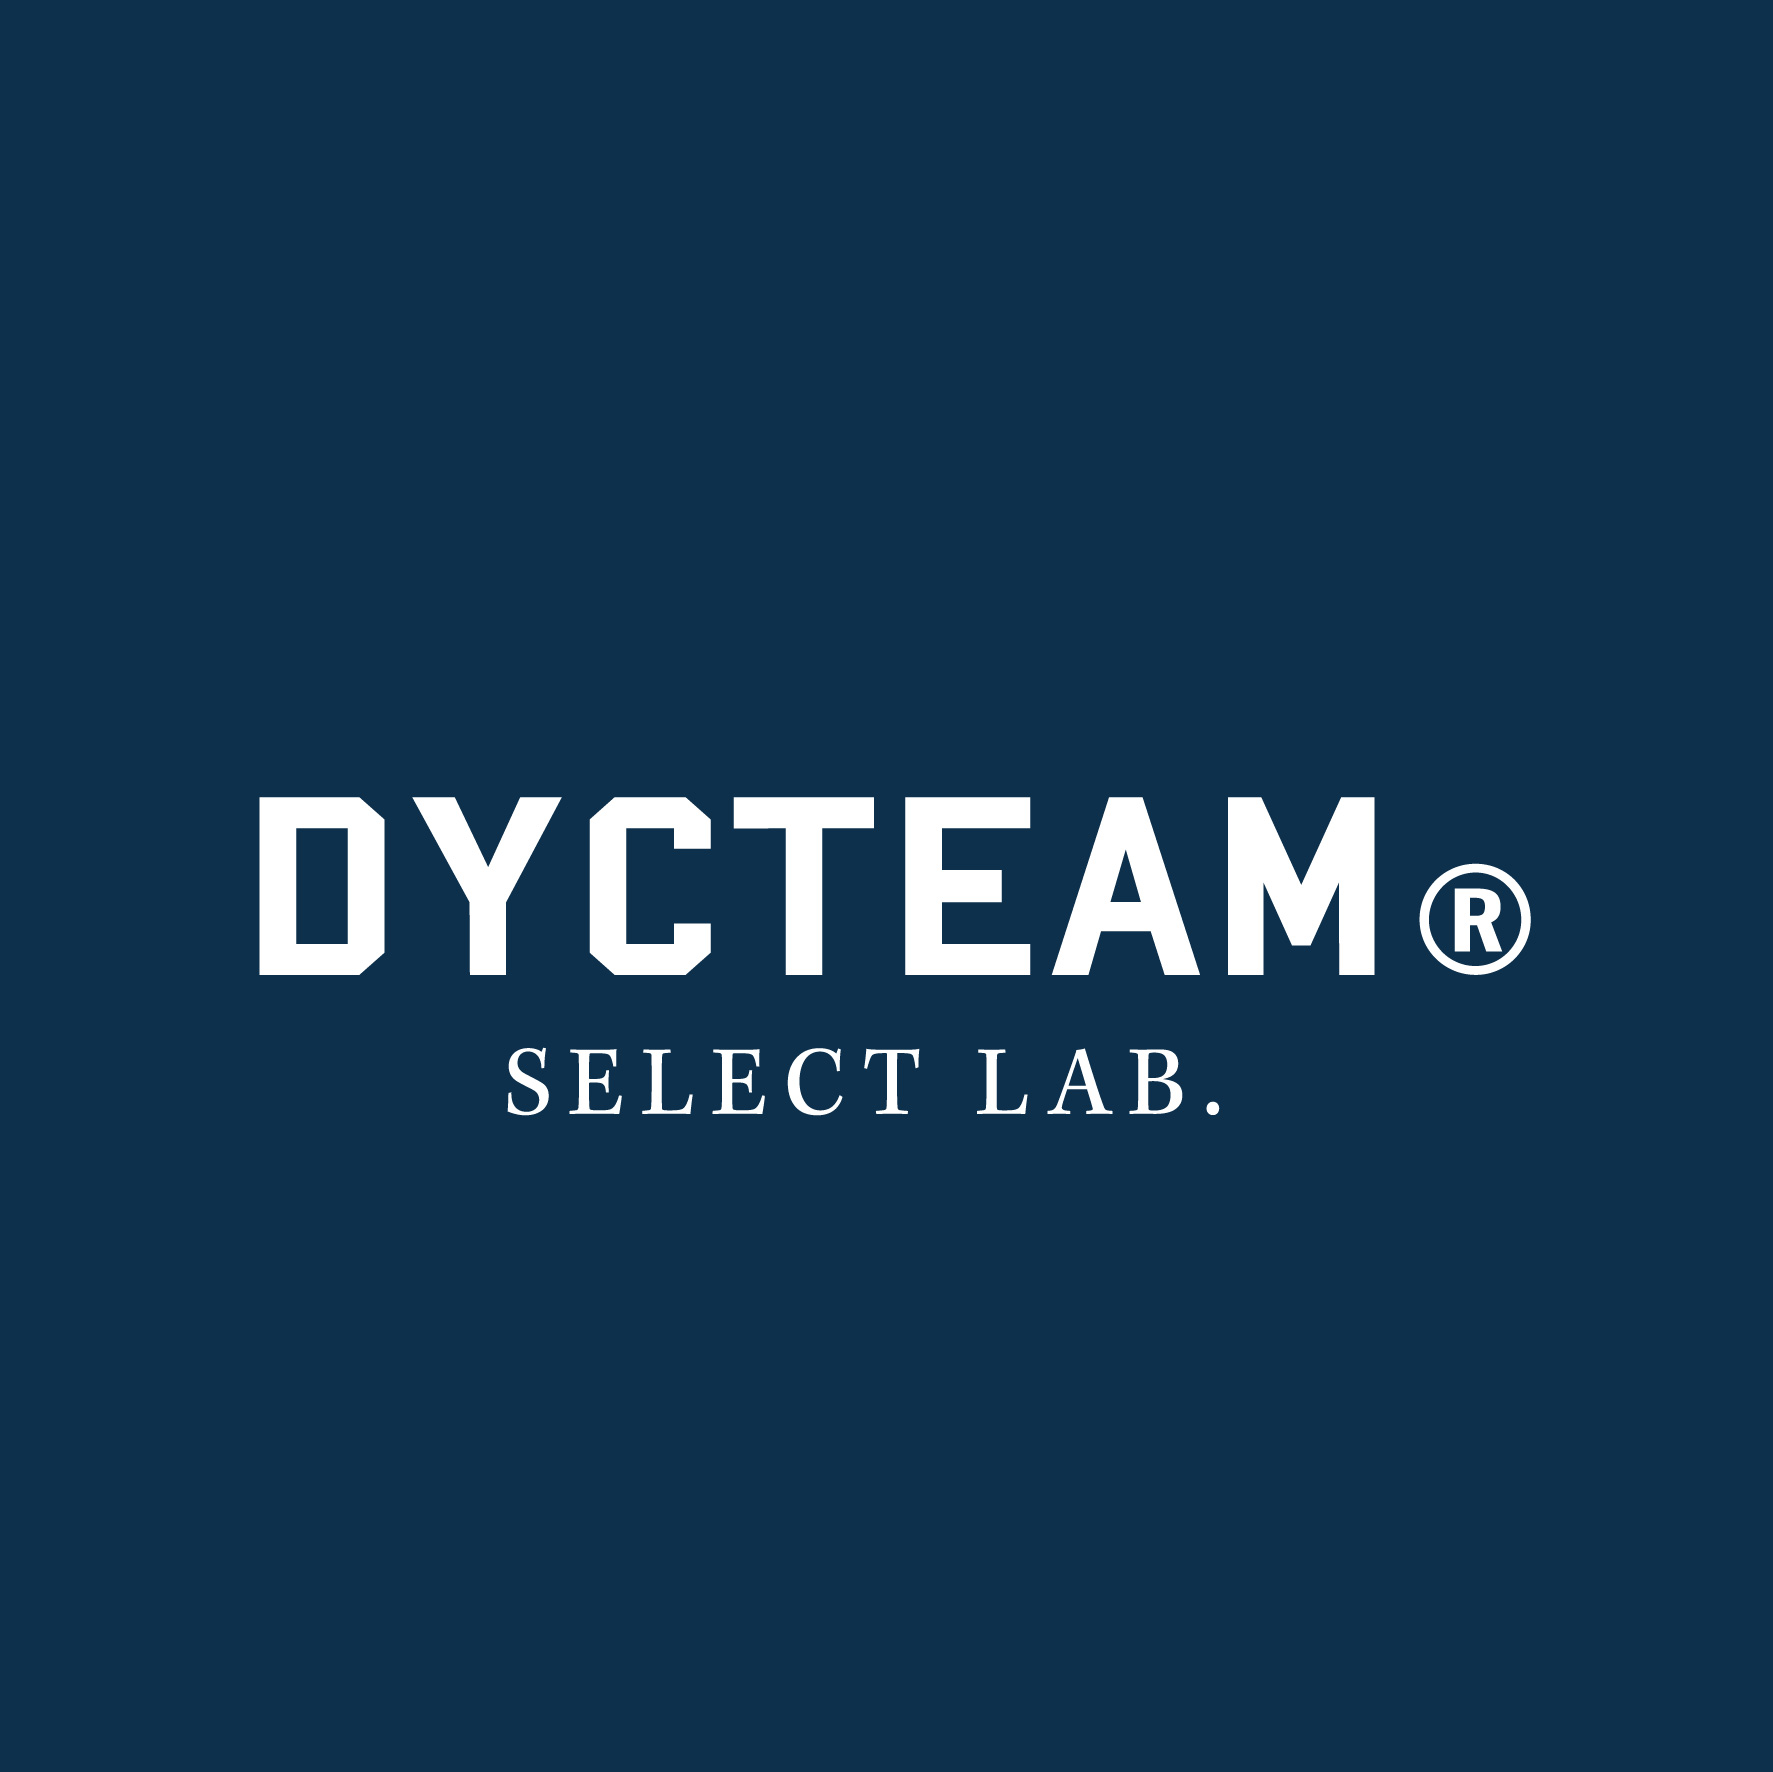 Dycteam select